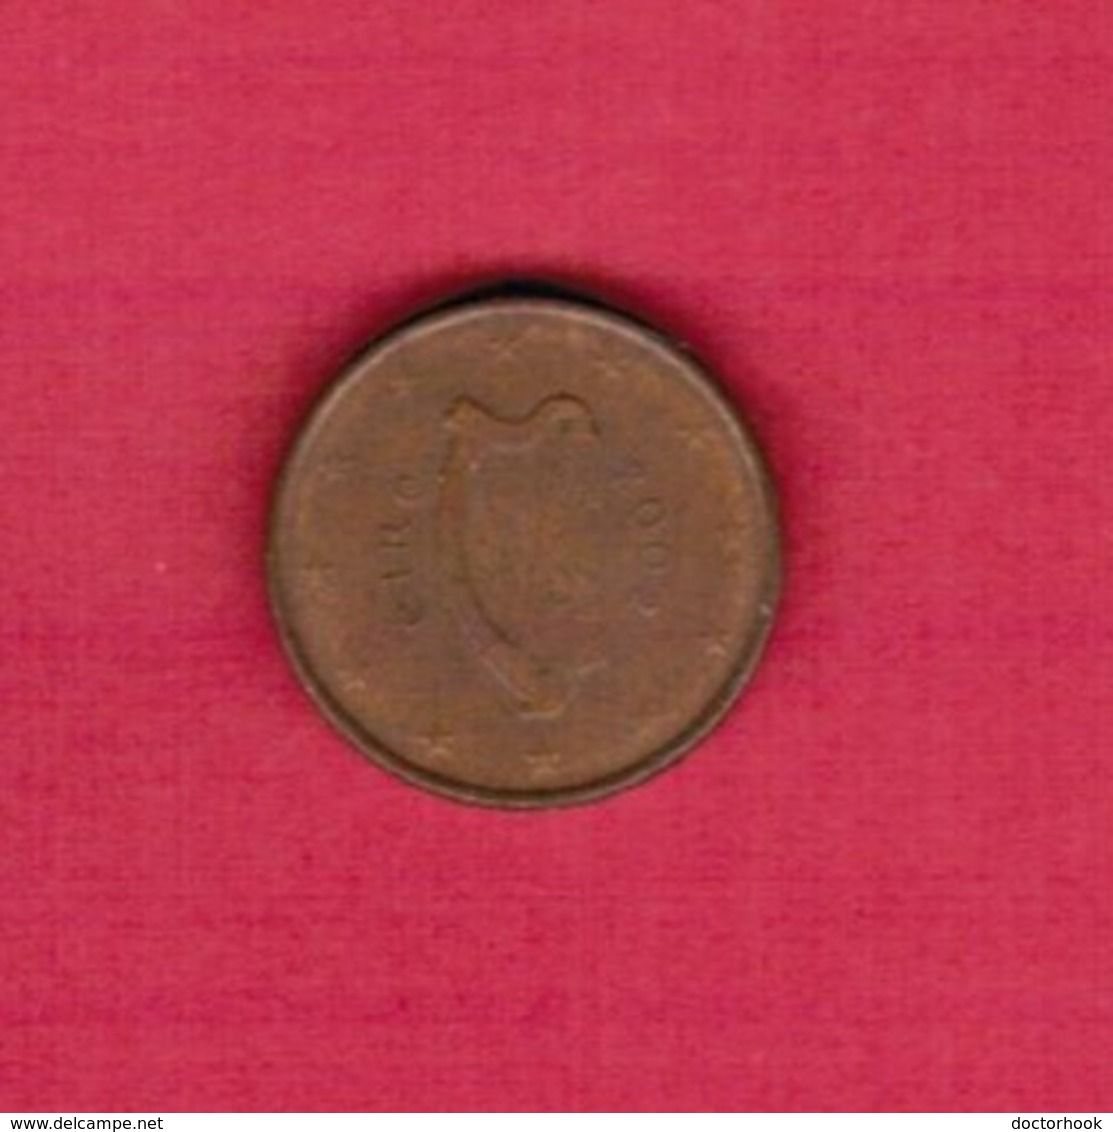 IRELAND   1 EURO CENT 2002 (KM # 32) #5225 - Ierland